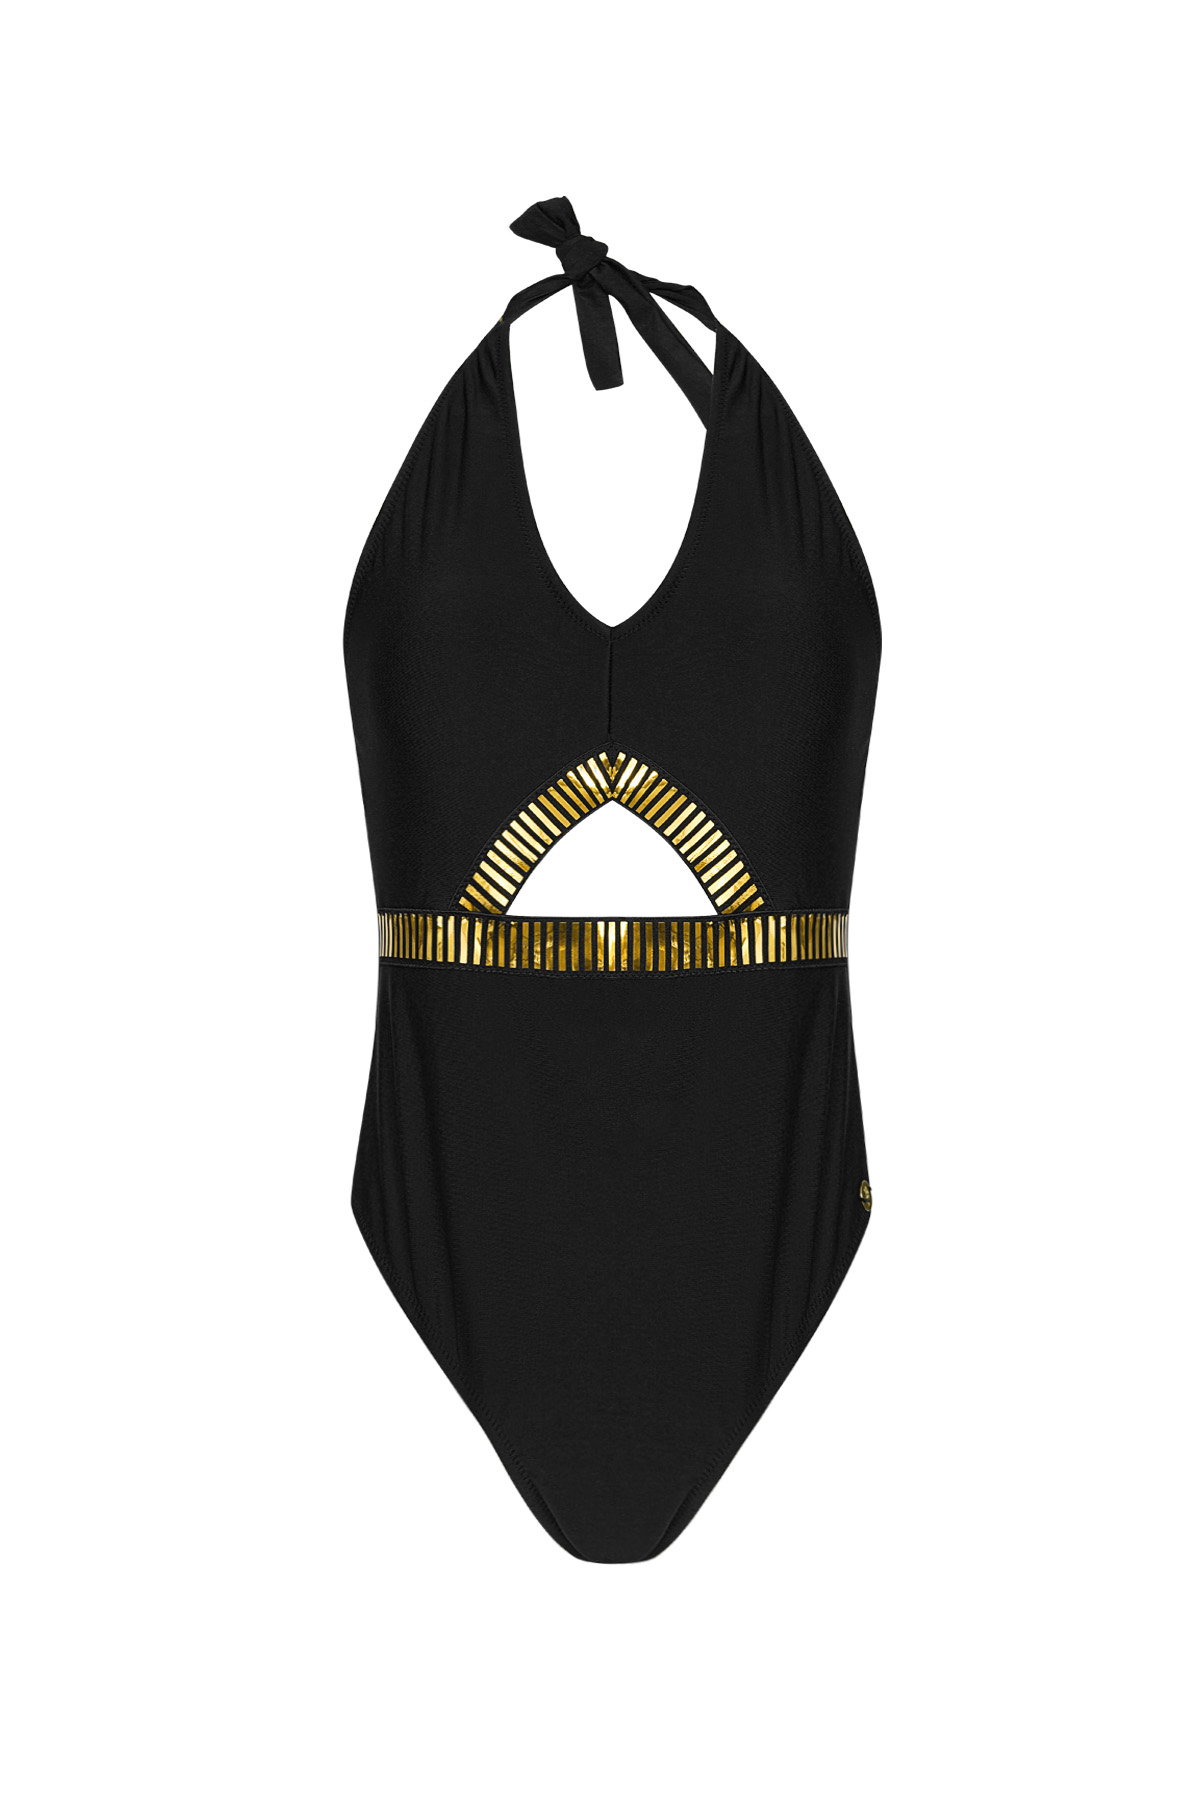 Swimsuit gold stripes - black L 